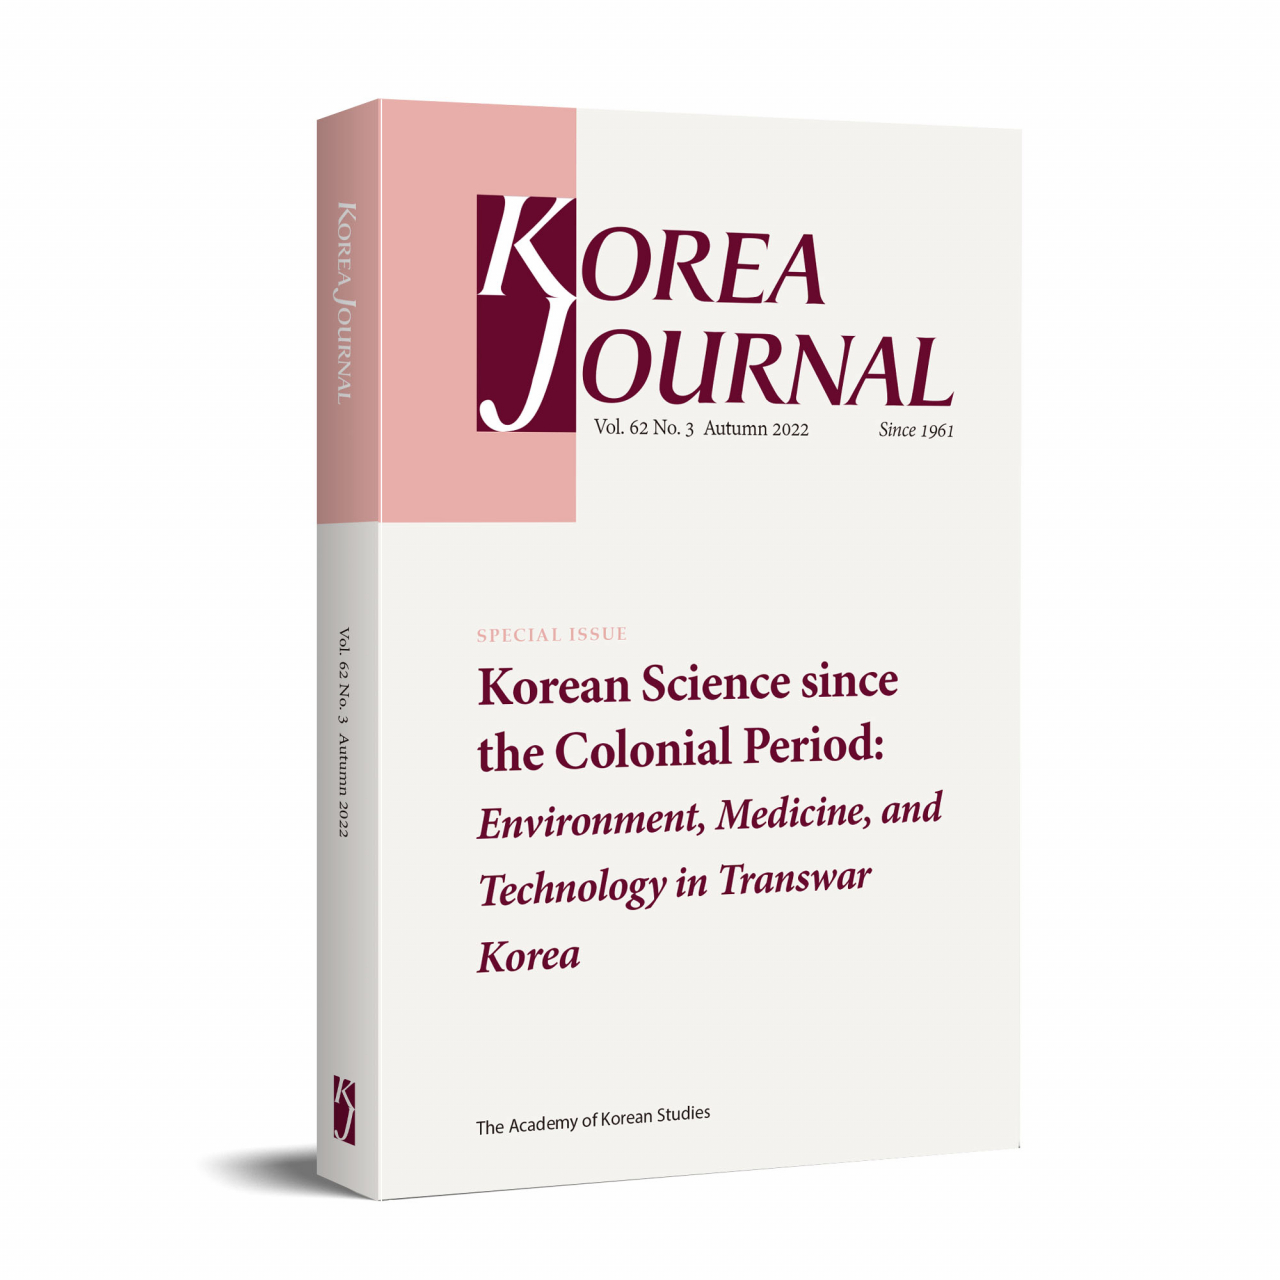 Autumn 2022 issue of Korea Journal (Academy of Korean Studies)